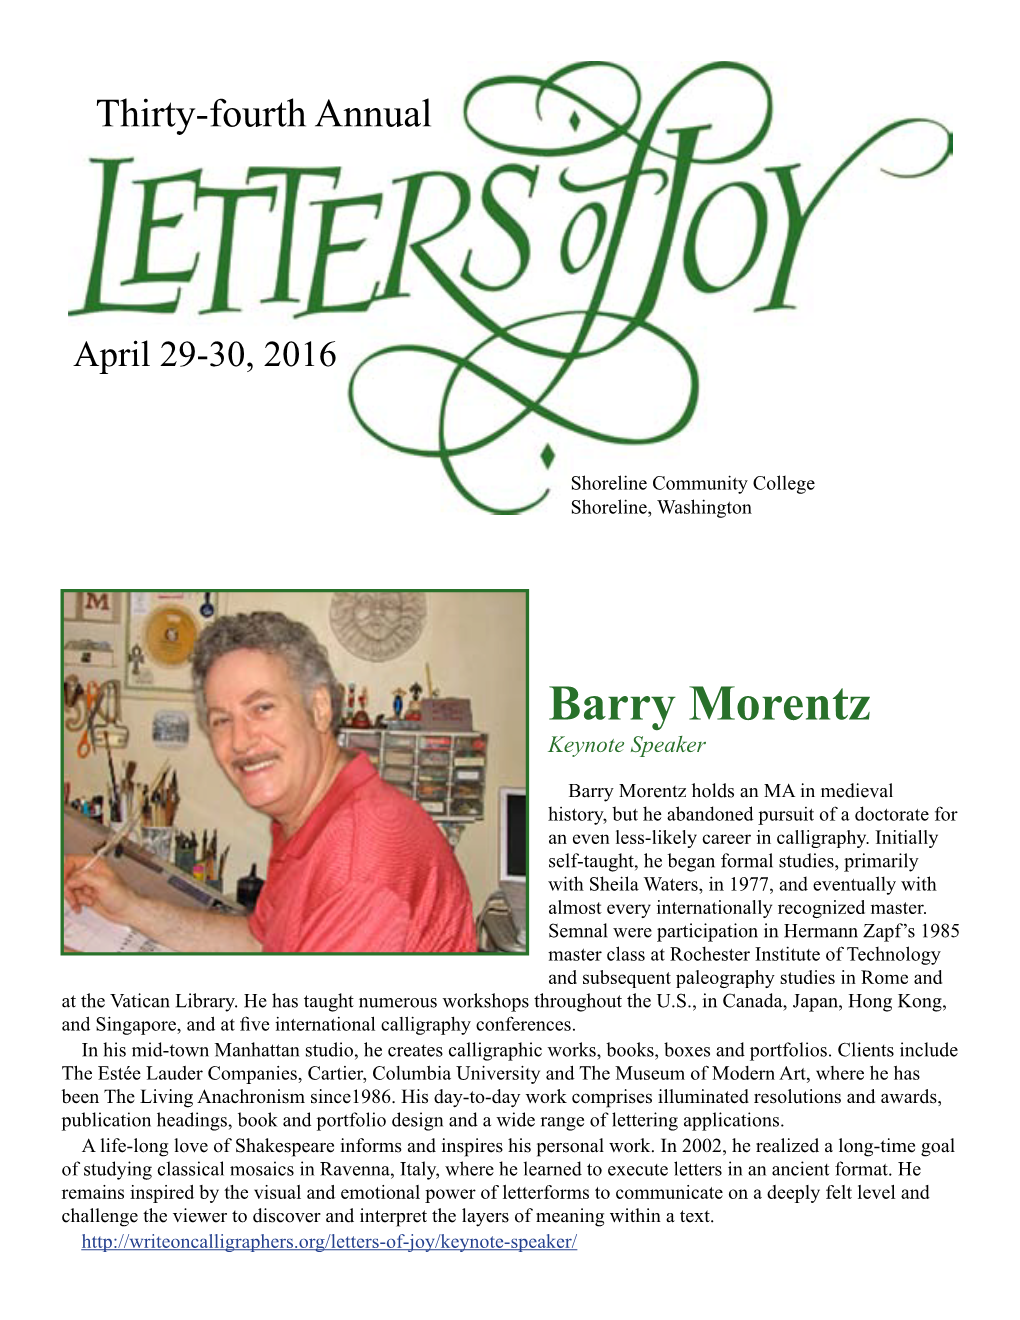 Barry Morentz Keynote Speaker